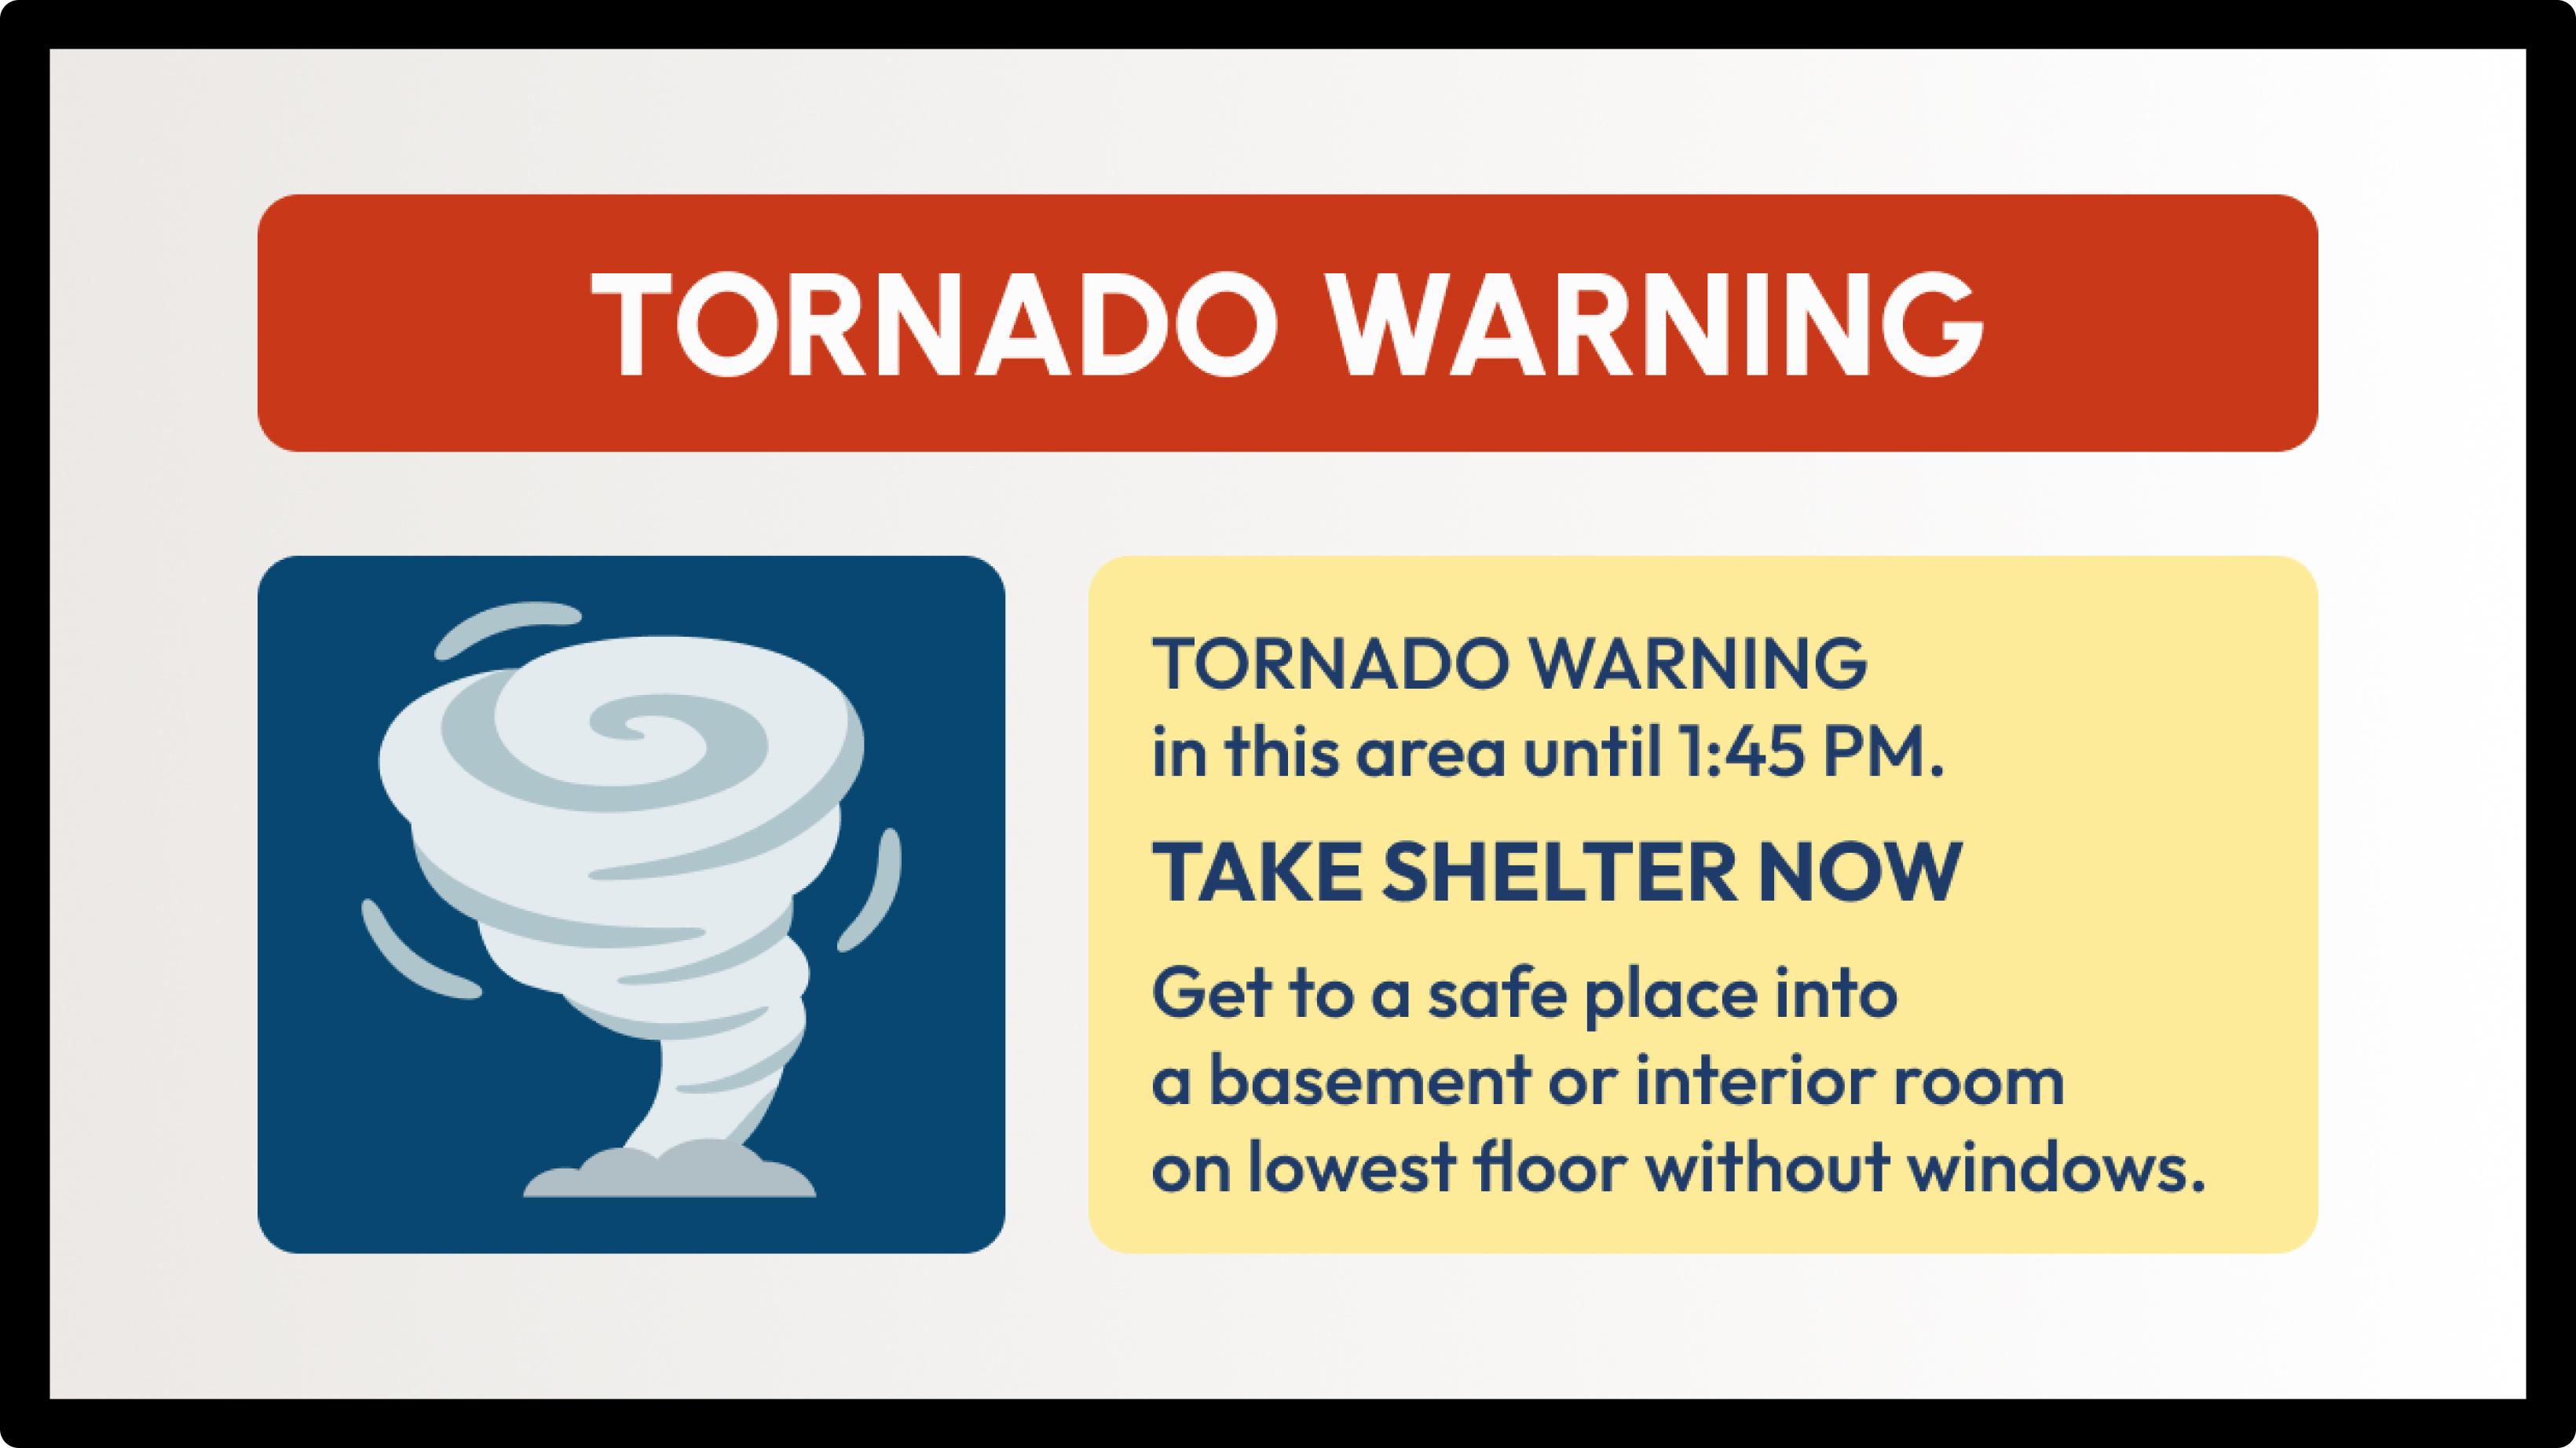 Screen example: Tornado warning